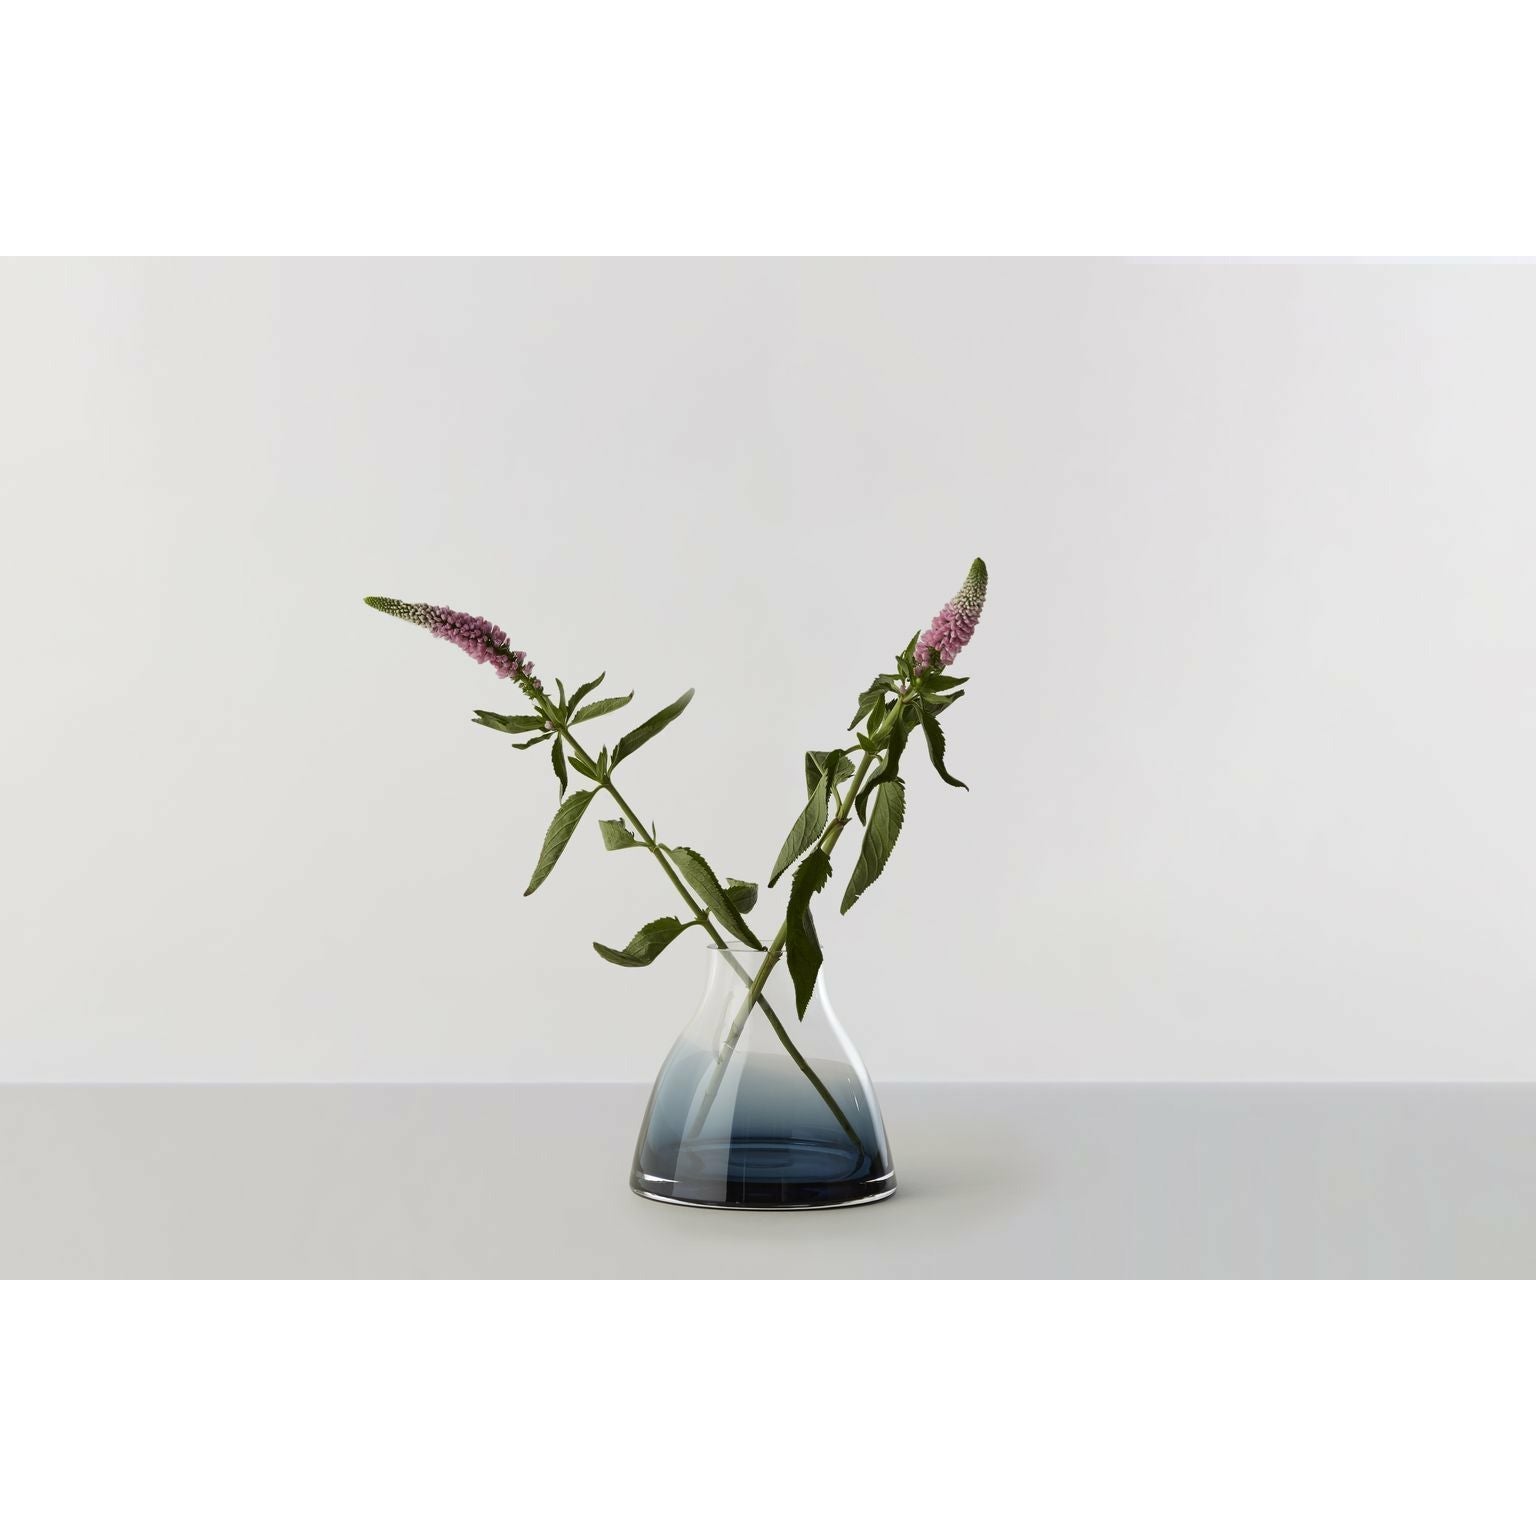 RO kolekce č. 1 Flower Vase Øxh 13 x12, Indigo Blue